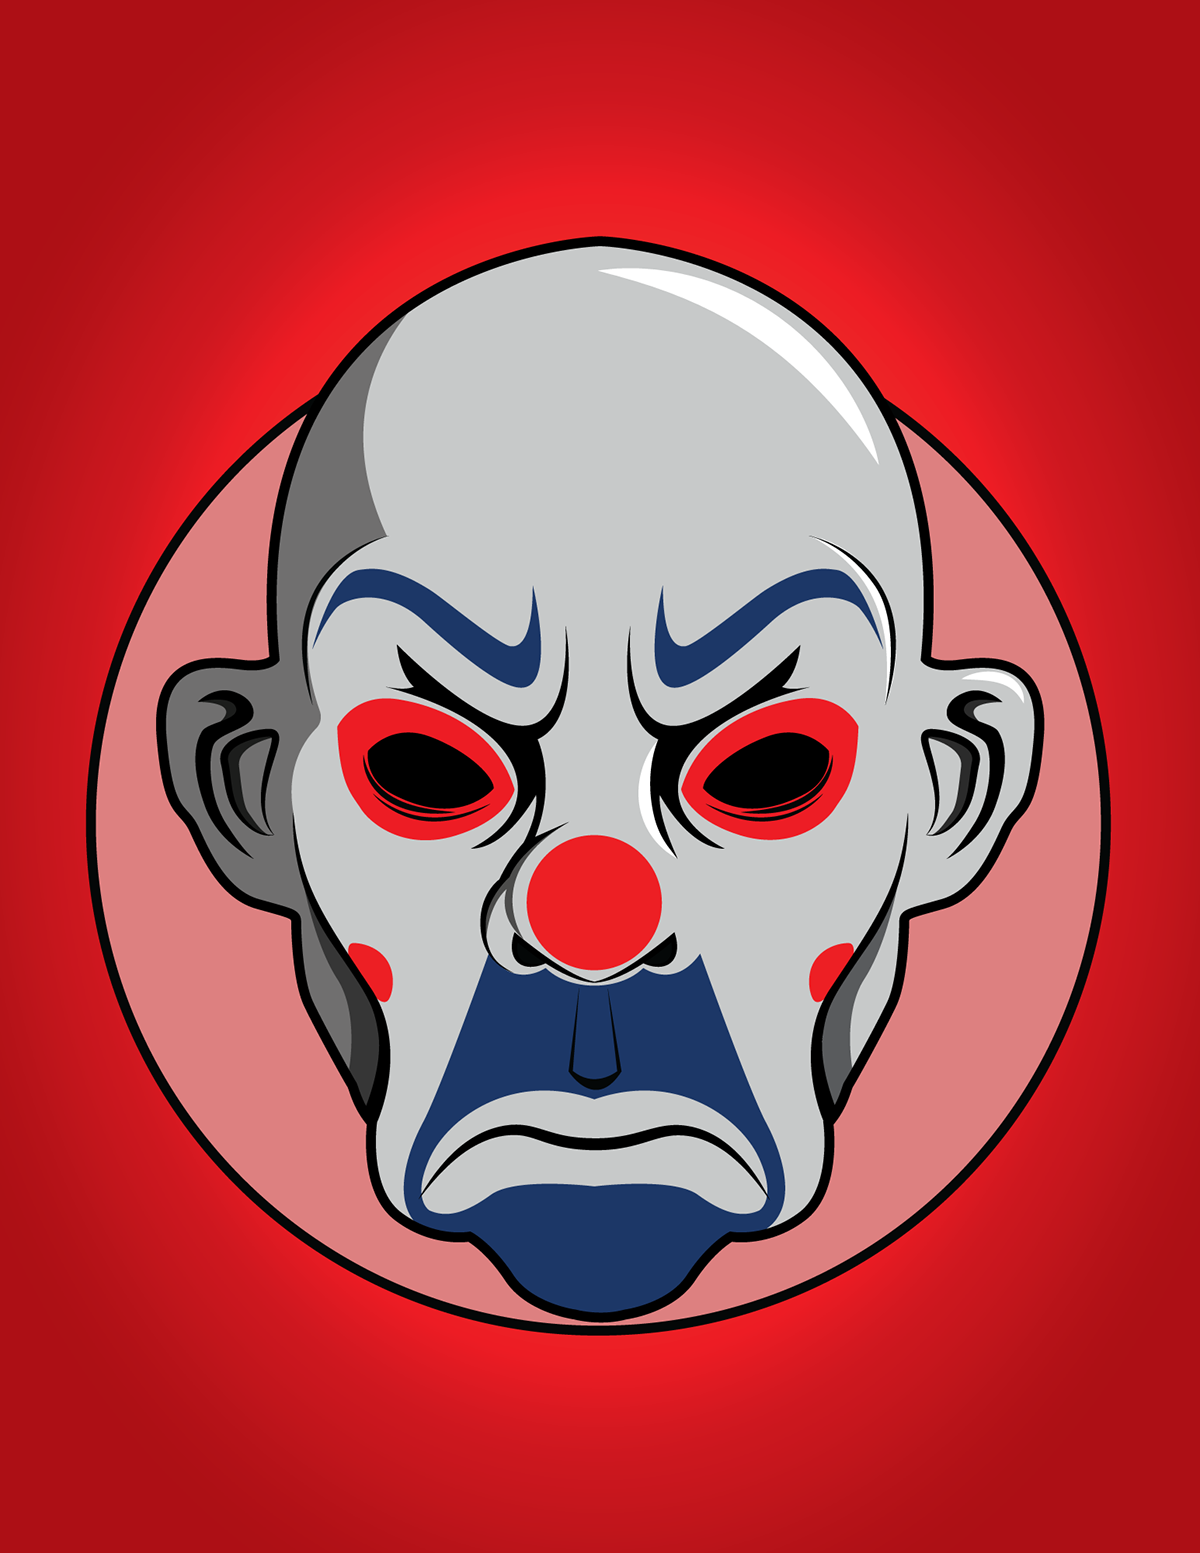 Joker Clown Mask on Behance